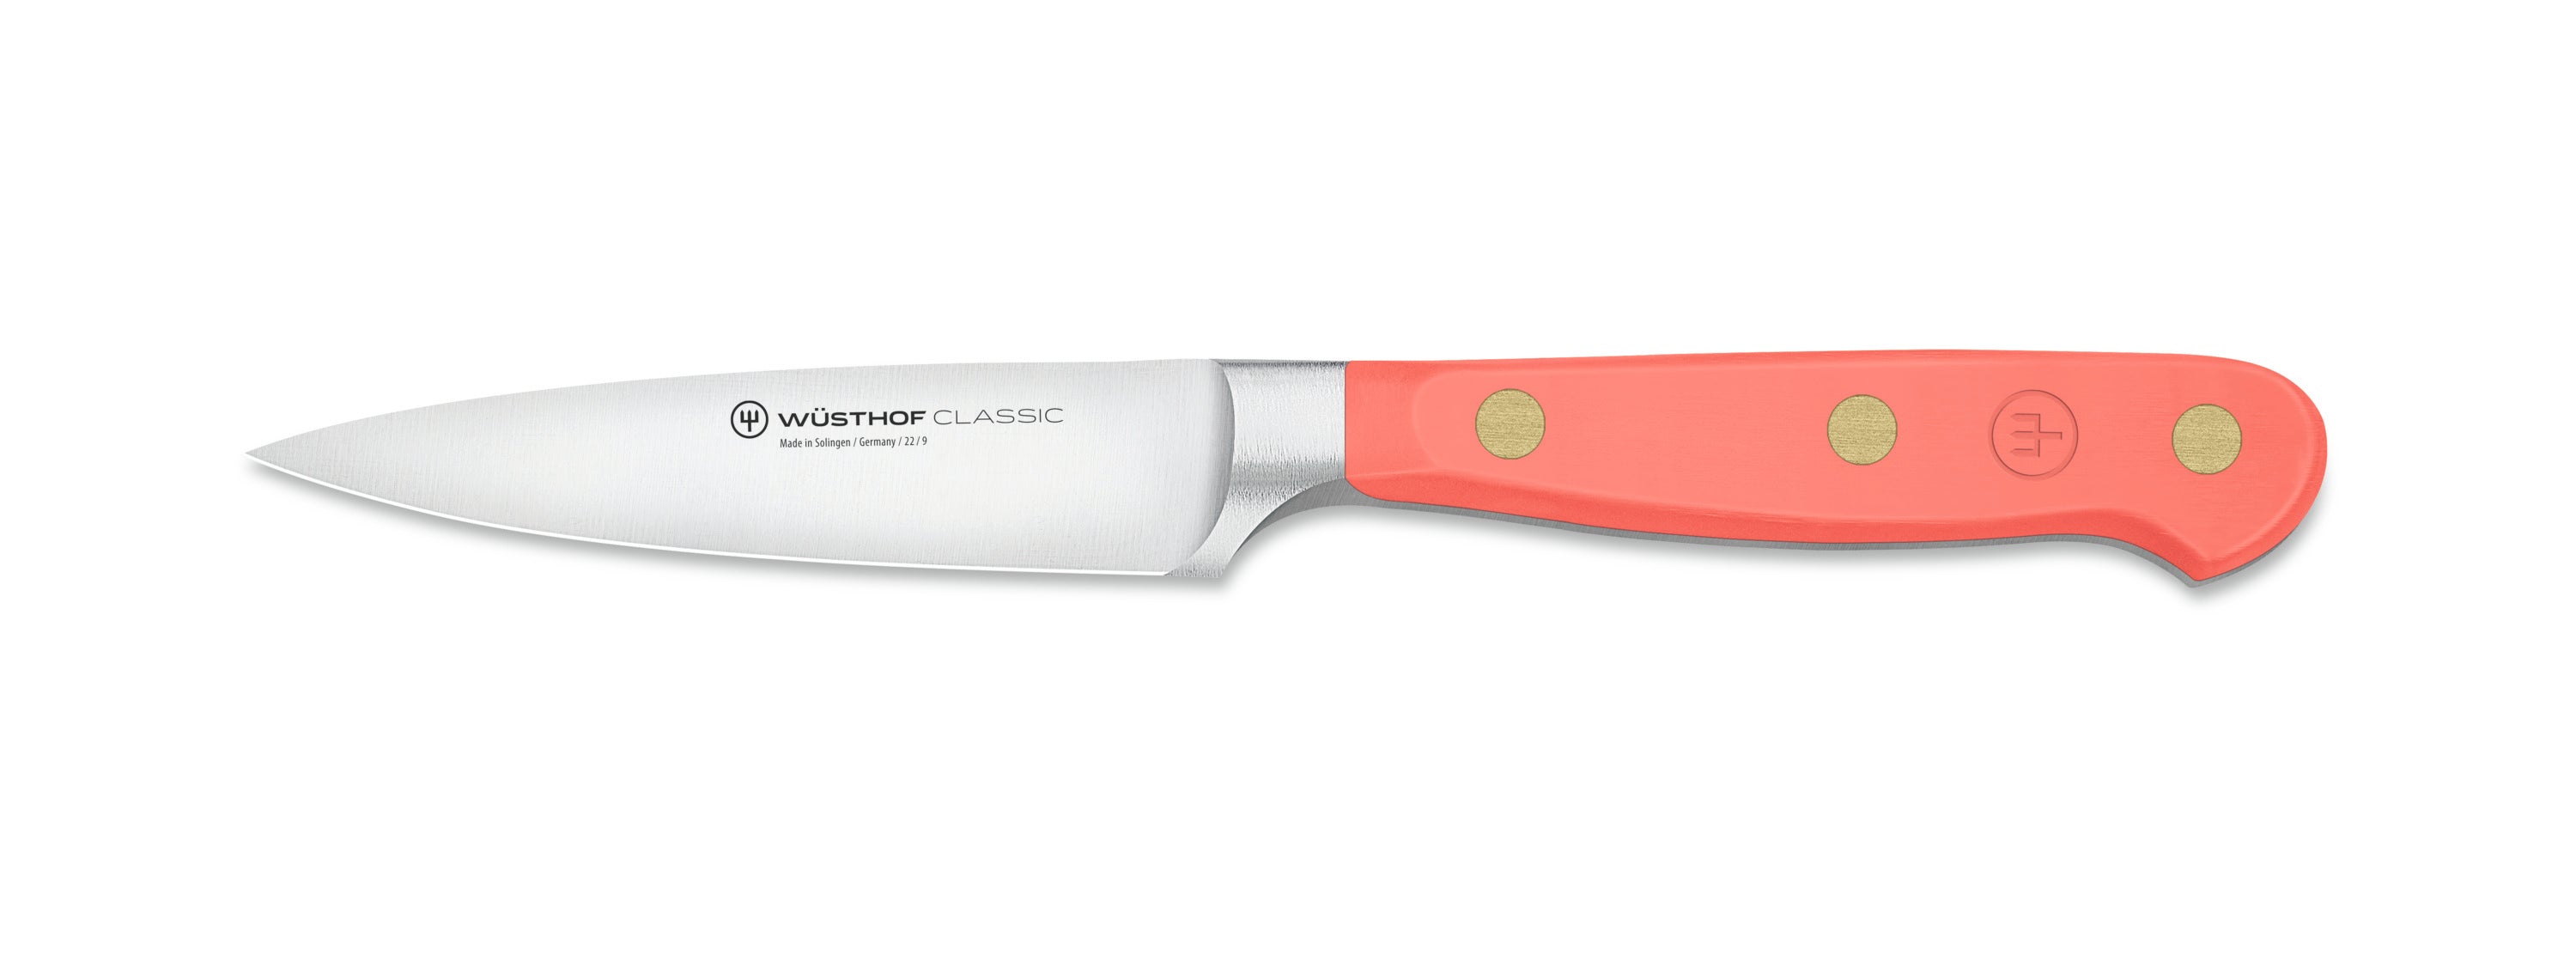 Wusthof Classic Colour Coral Peach Paring Knife 9cm 1061702309W